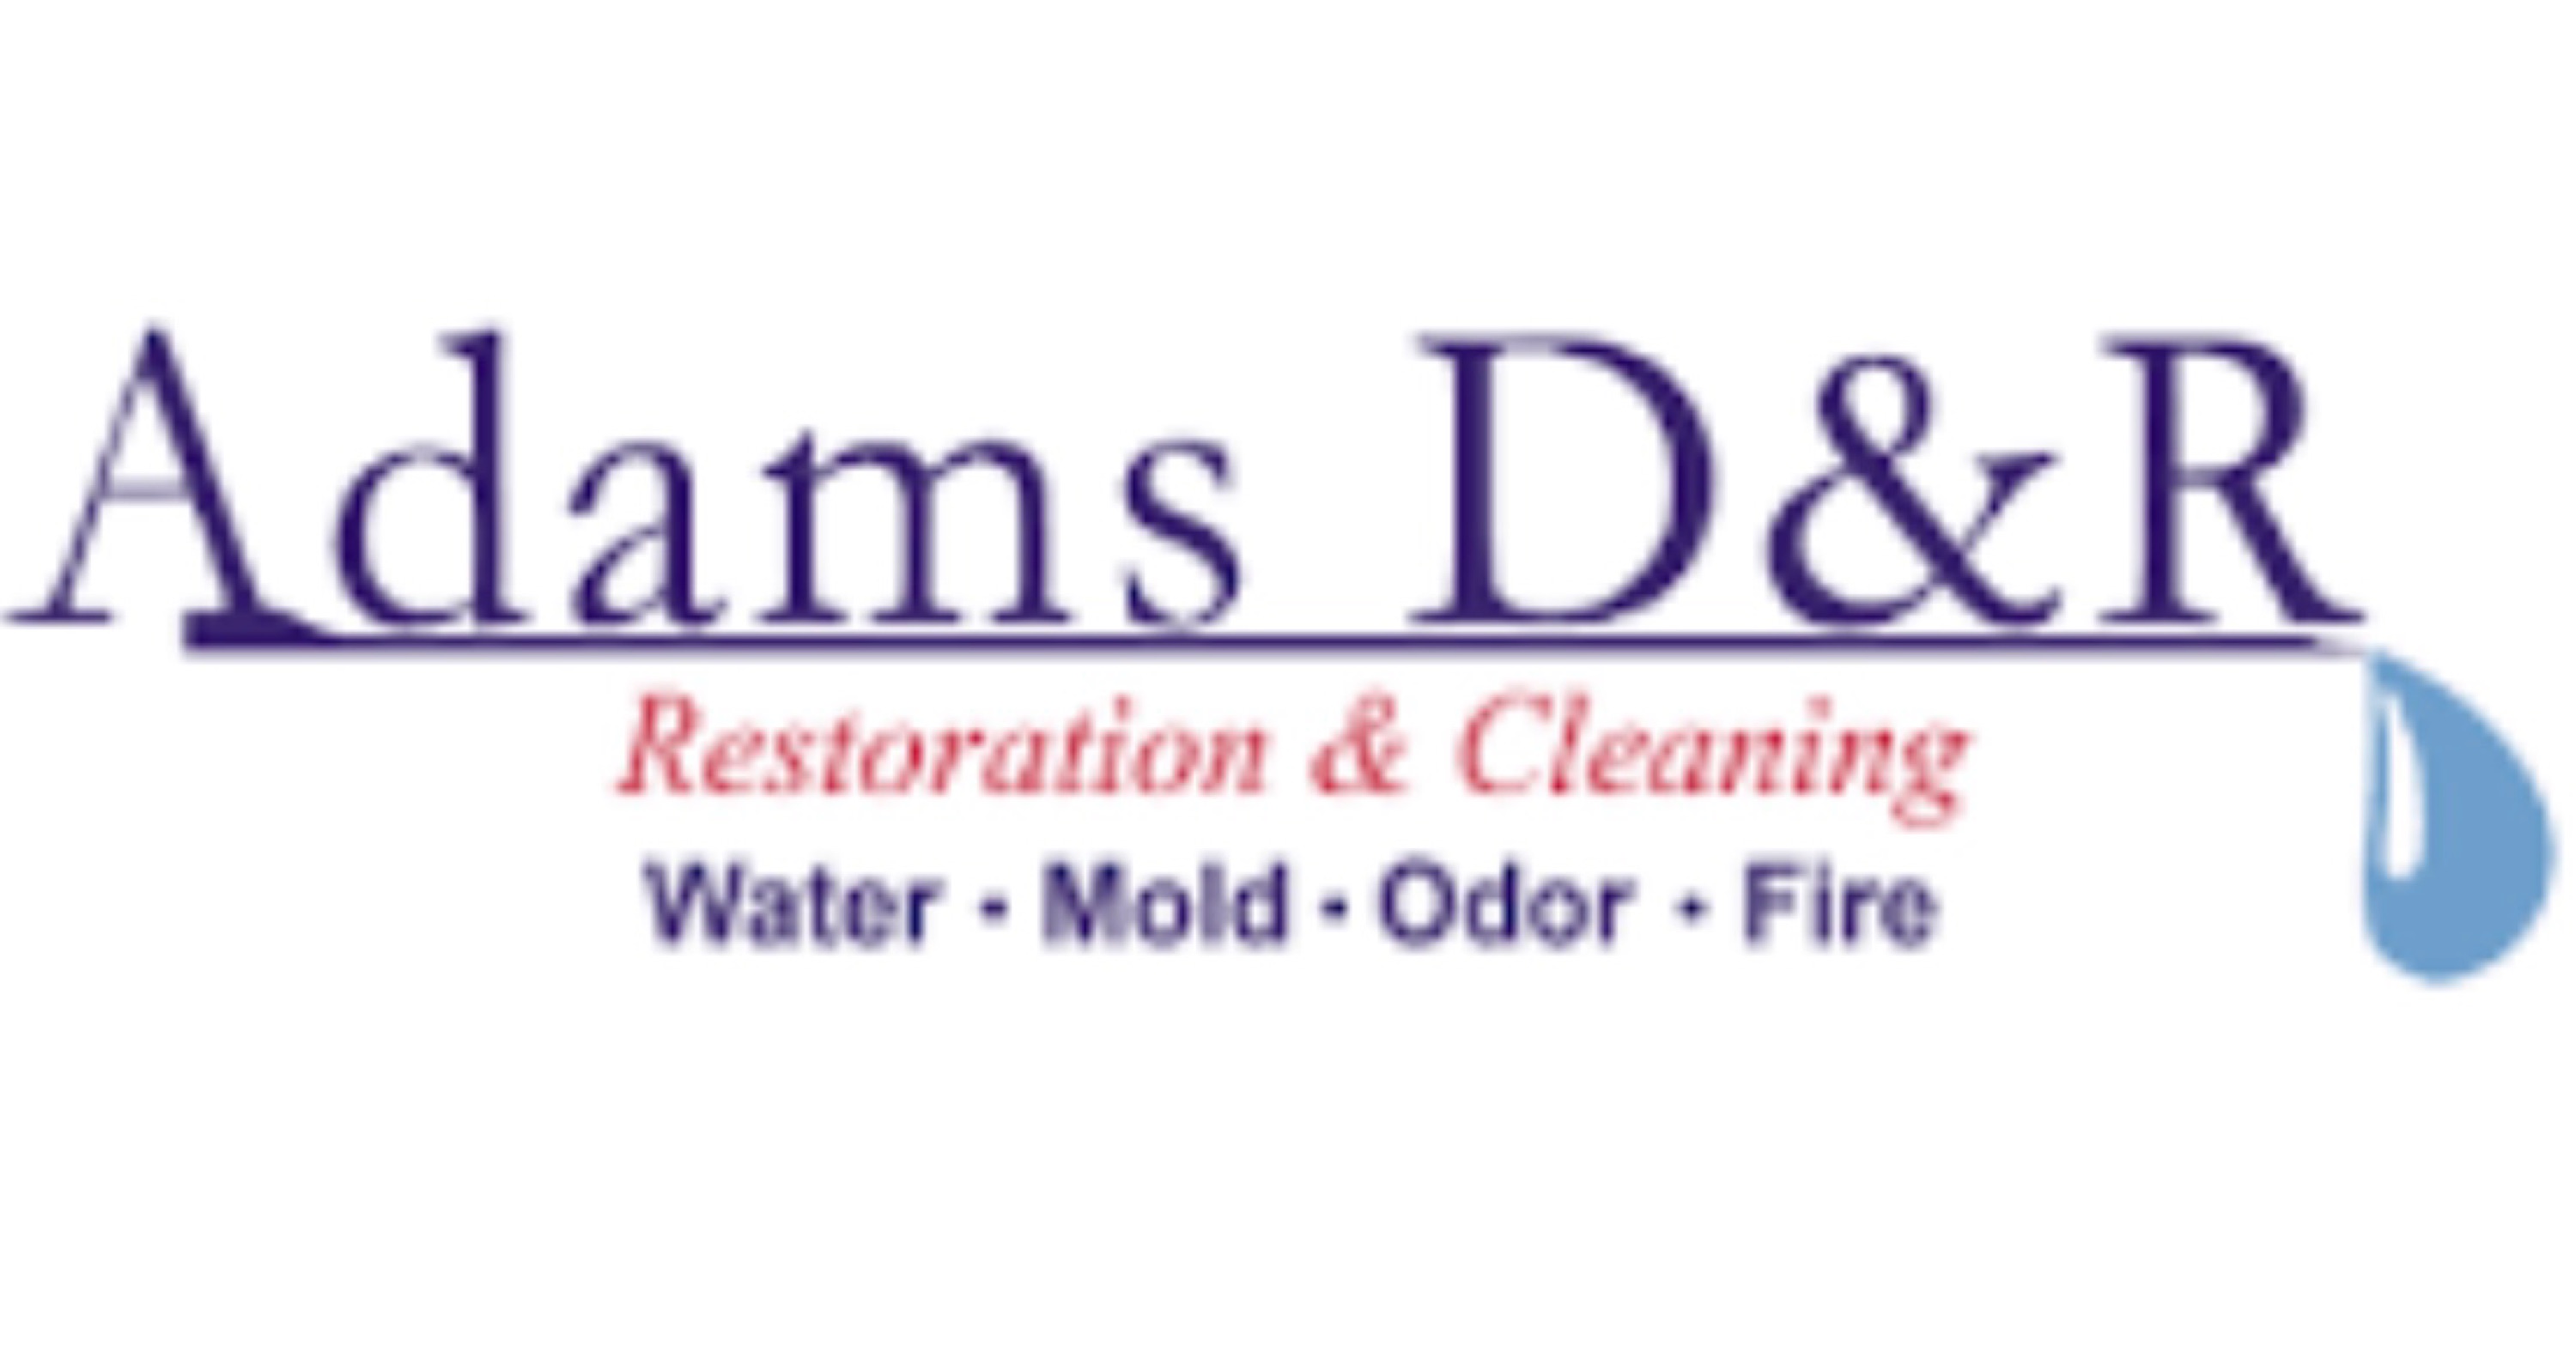 Adams Disaster and Restoration Logo